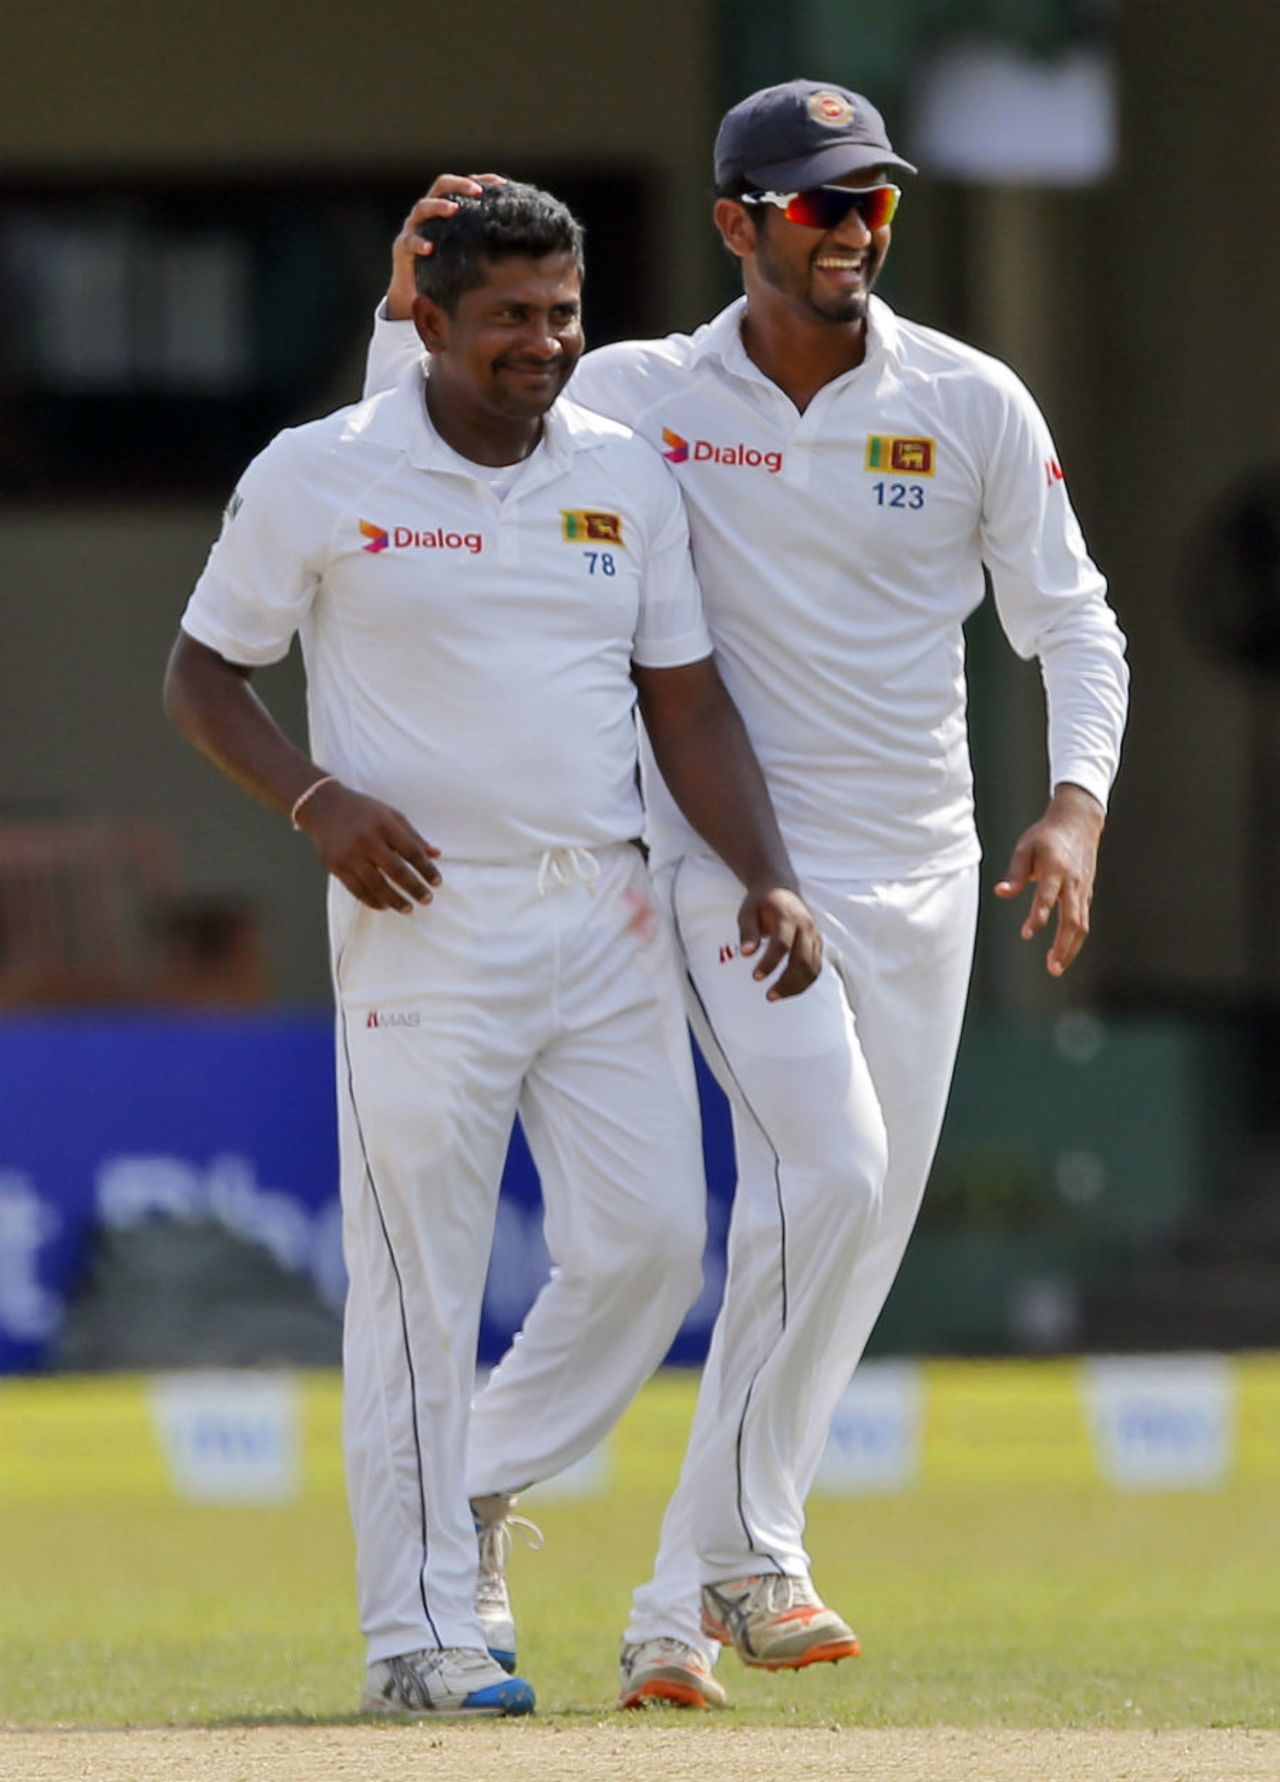 Rangana Herath is all smiles after dismissing Denesh Ramdin, Sri Lanka v West Indies, 2nd Test, Colombo, 2nd day, October 23, 2015